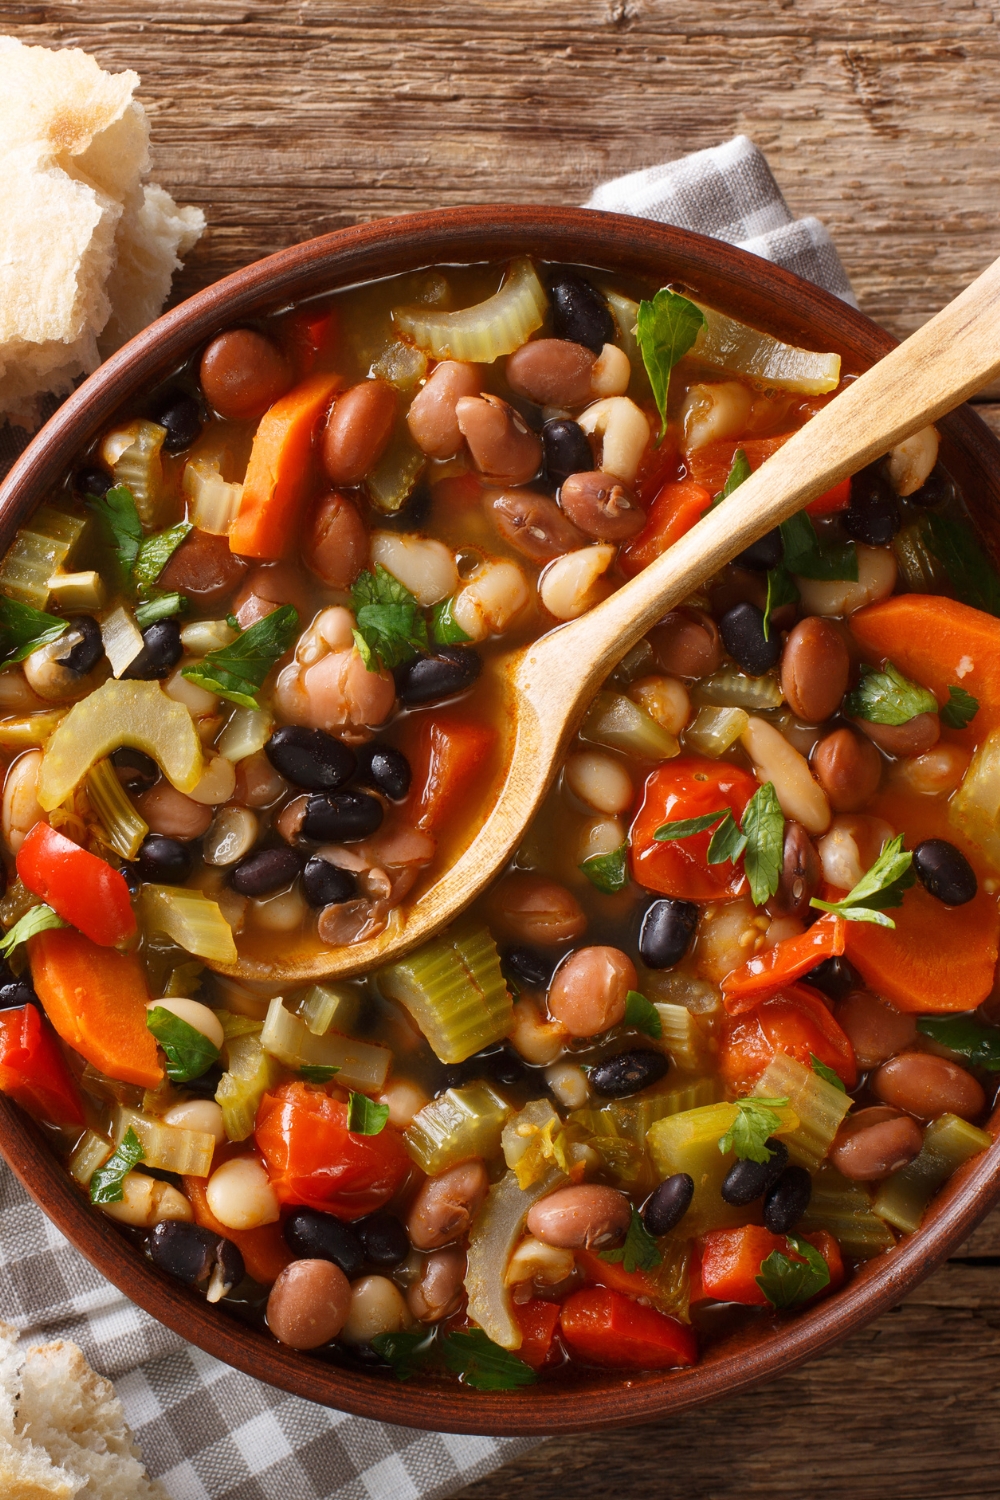 25 High Protein Vegan Black Bean Recipes - Insanely Good